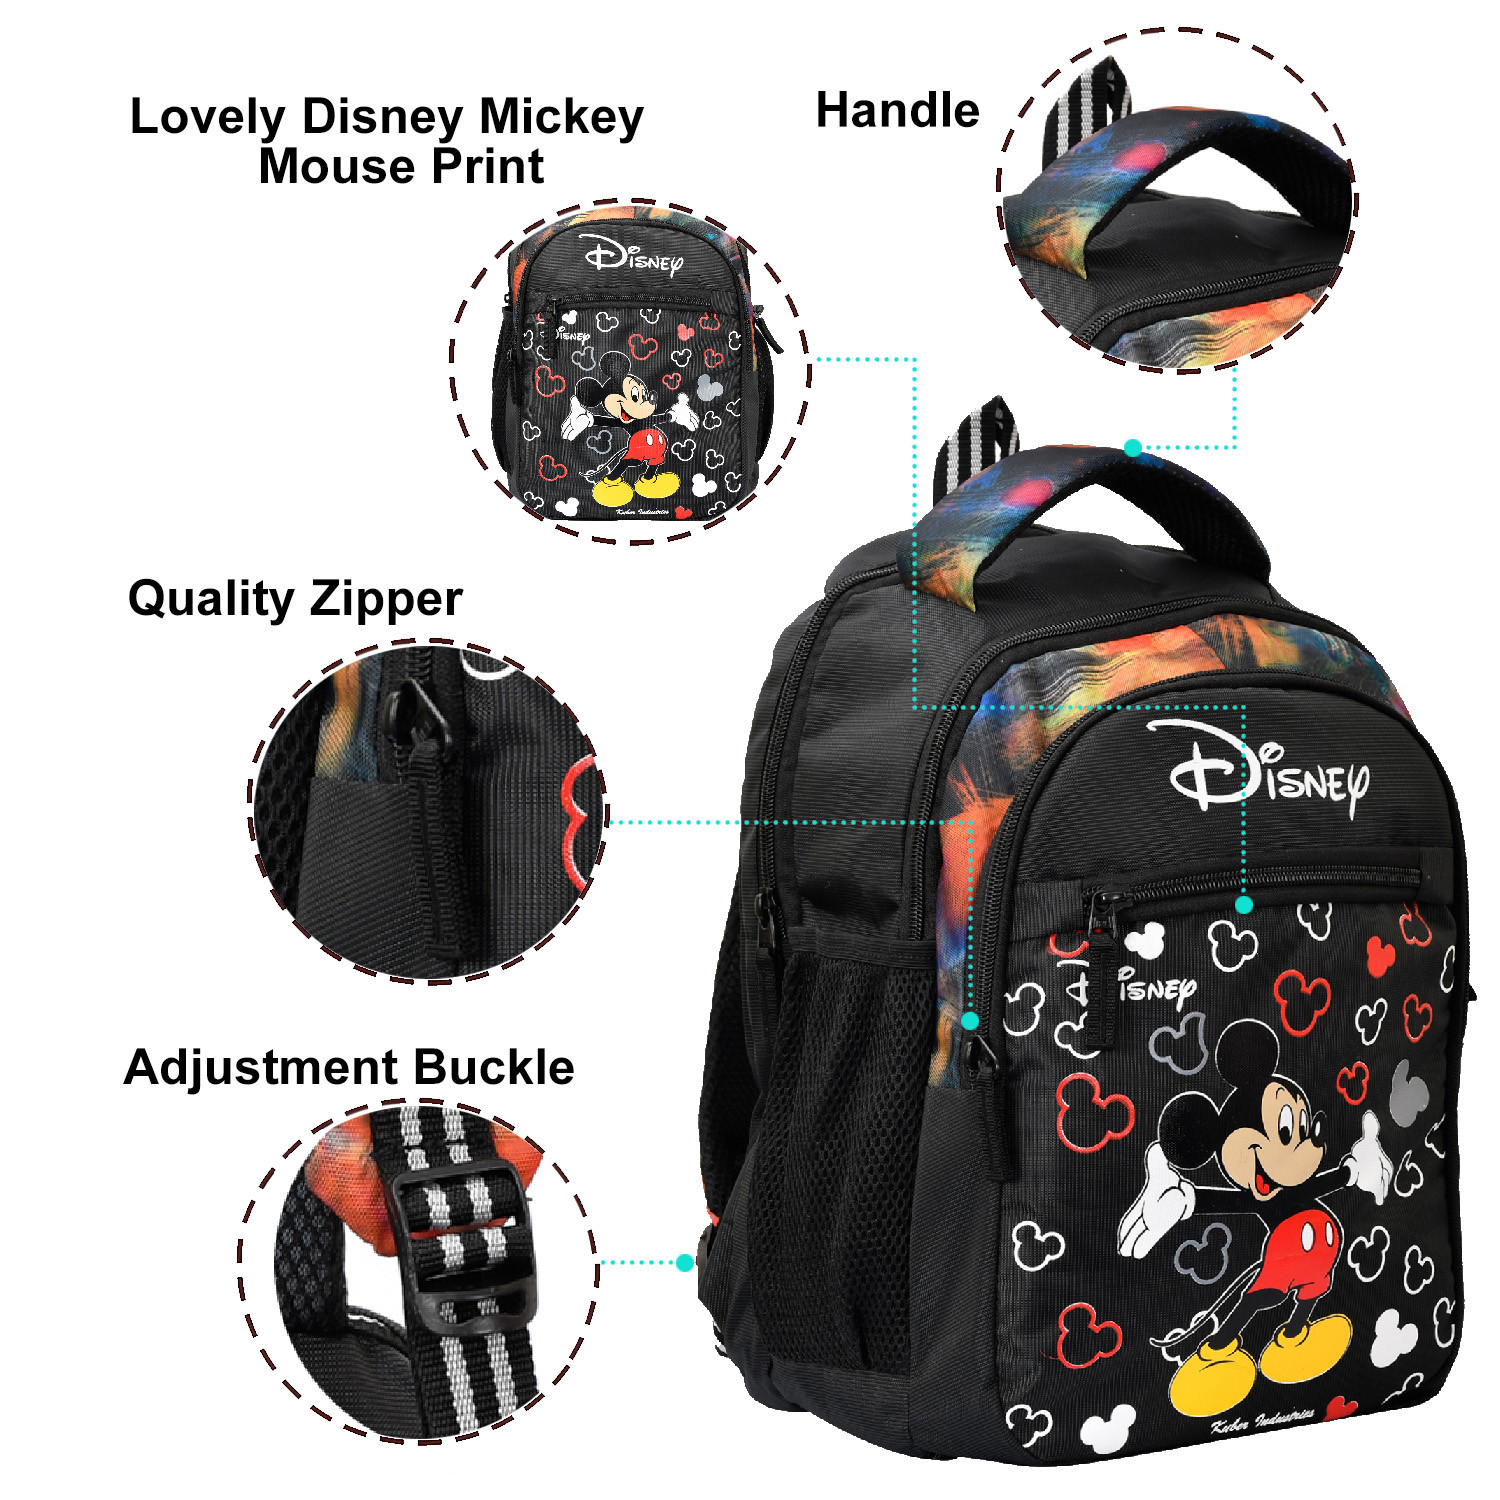 Kuber Industries Disney-Mickey School Bag | Kids School Bags | Student Bookbag | Spacious School Bag | School Bag for Girls & Boys | School Backpack for Kids | 4 Compartments School Bag | Black